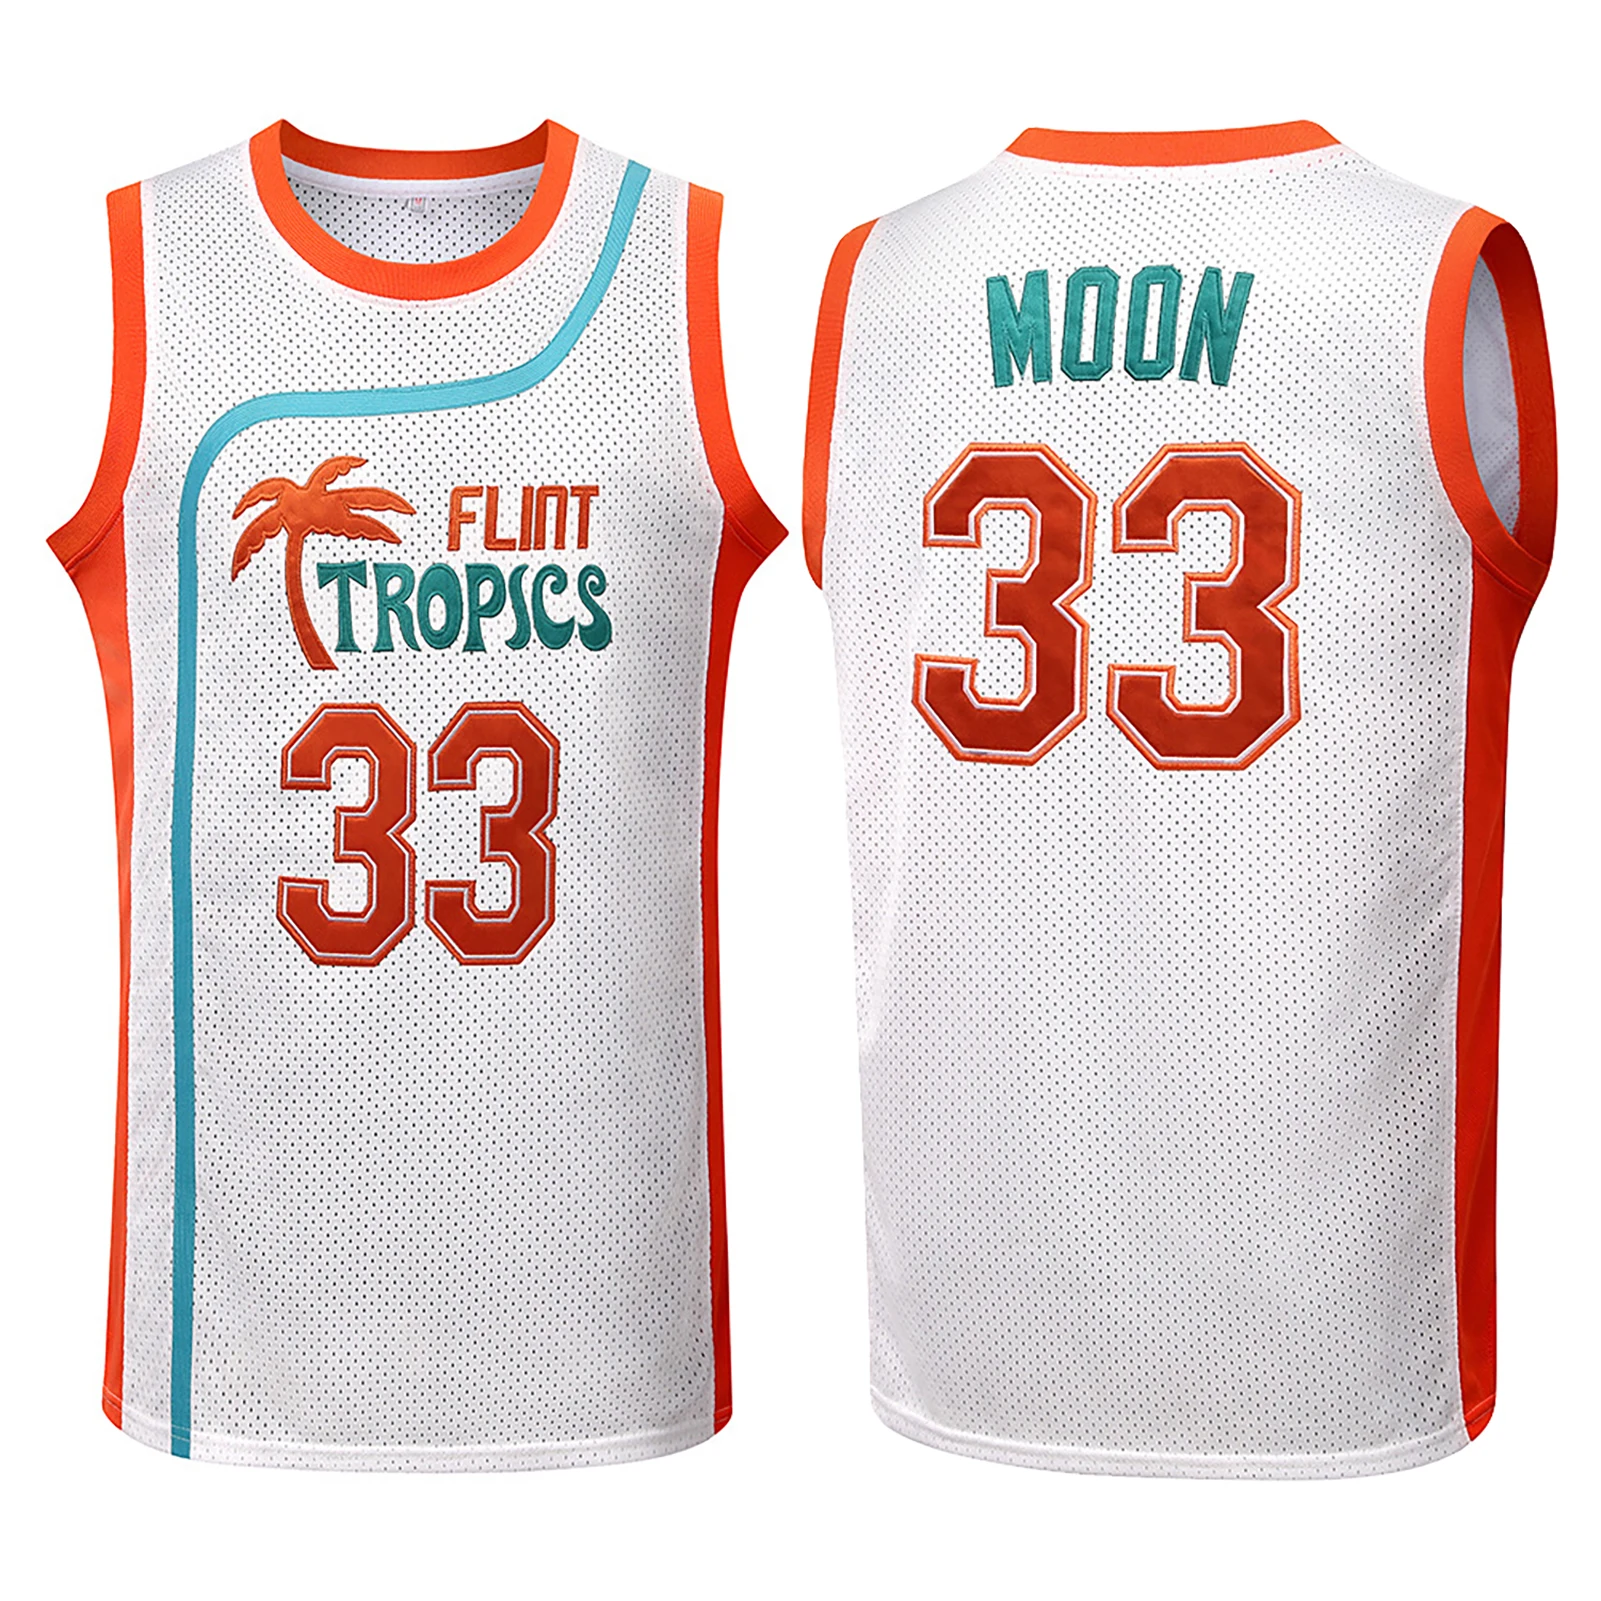 Jackie Moon Jersey 33 Flint Tropics Basketball Jersey 7 Coffee Black Jersey  Sports Shirt 11 Ed Monix Movie Mens Jersey Cosplay